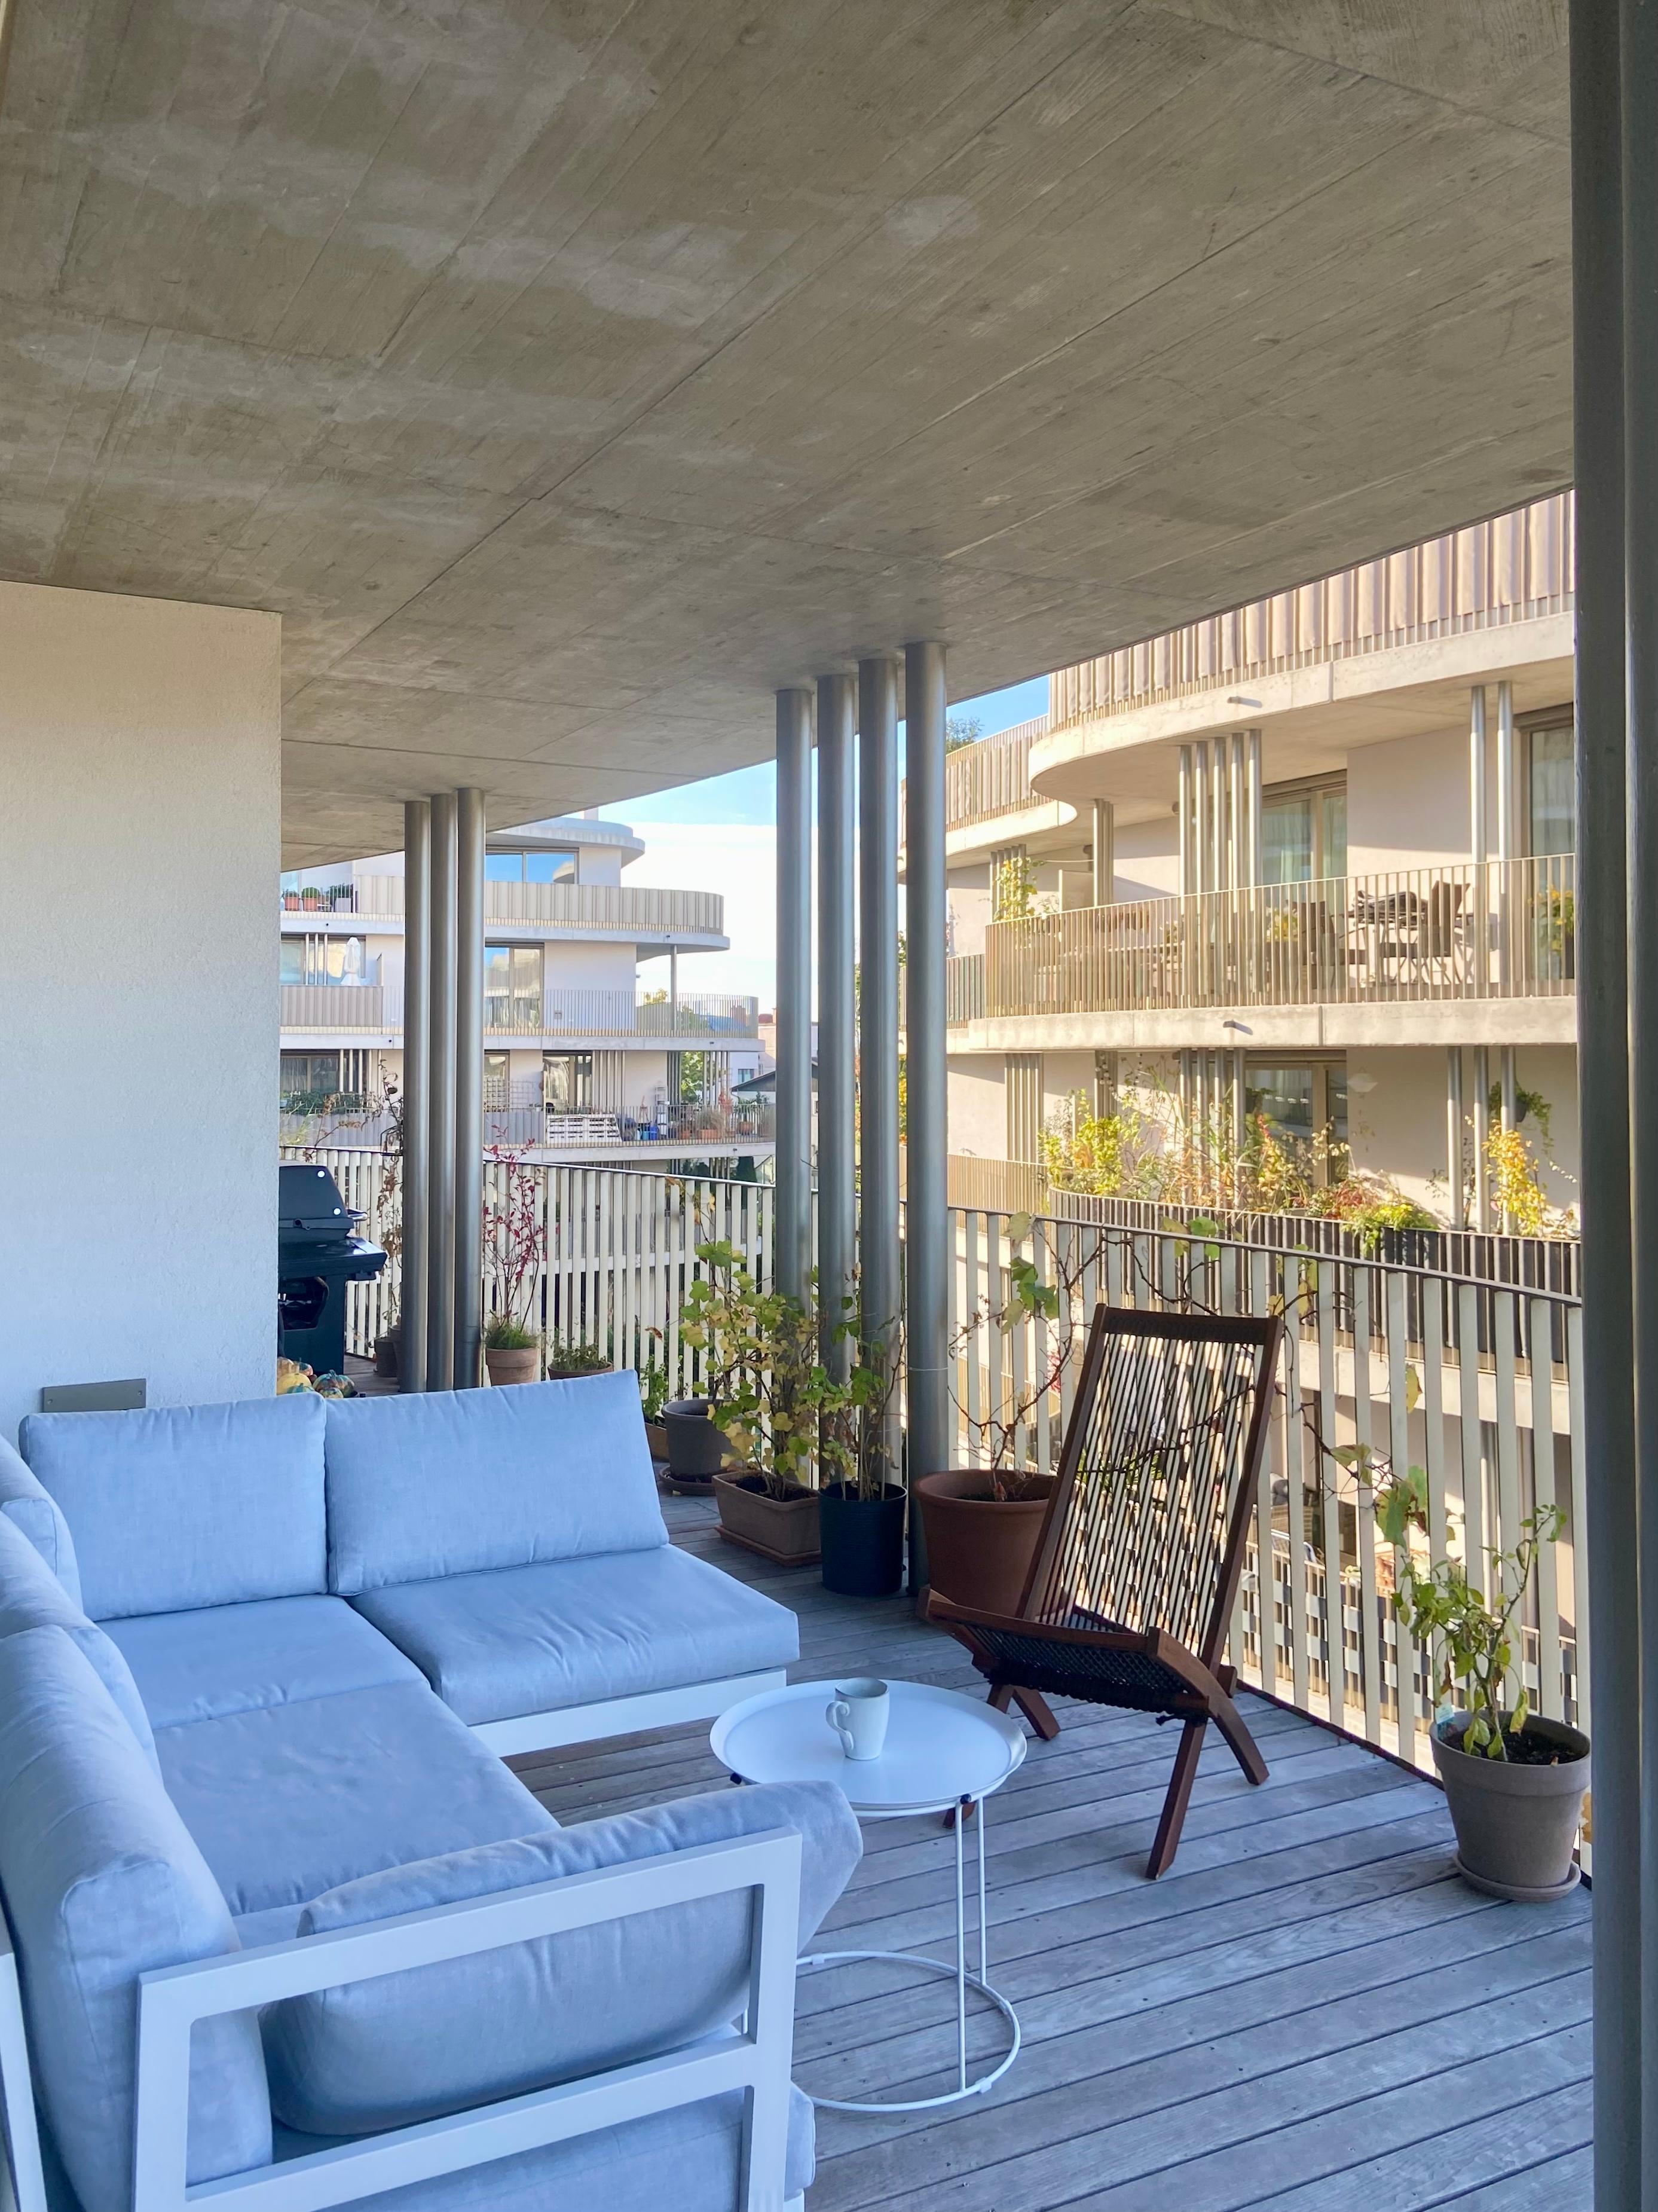 #kaffeeliebe #livingchallenge #terrasse #balkon #beton #sichtbeton #industrial 